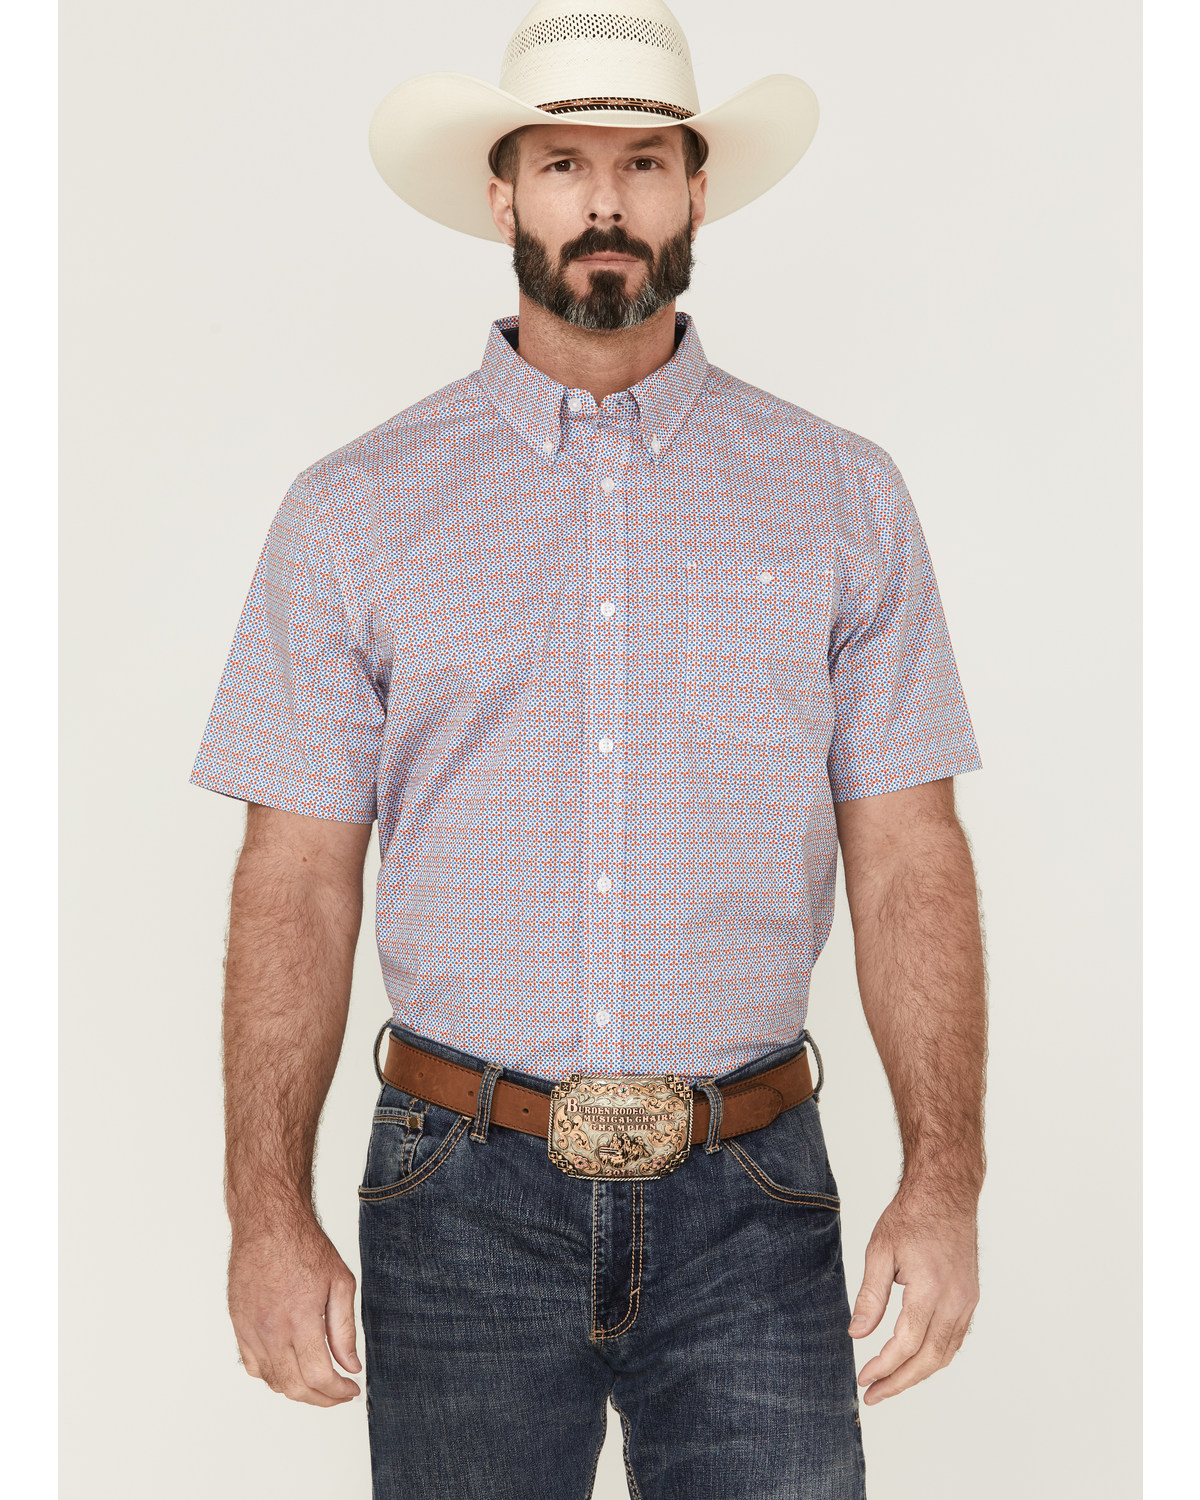 RANK 45® Men's Dude Ranch Geo Button-Down Western Shirt